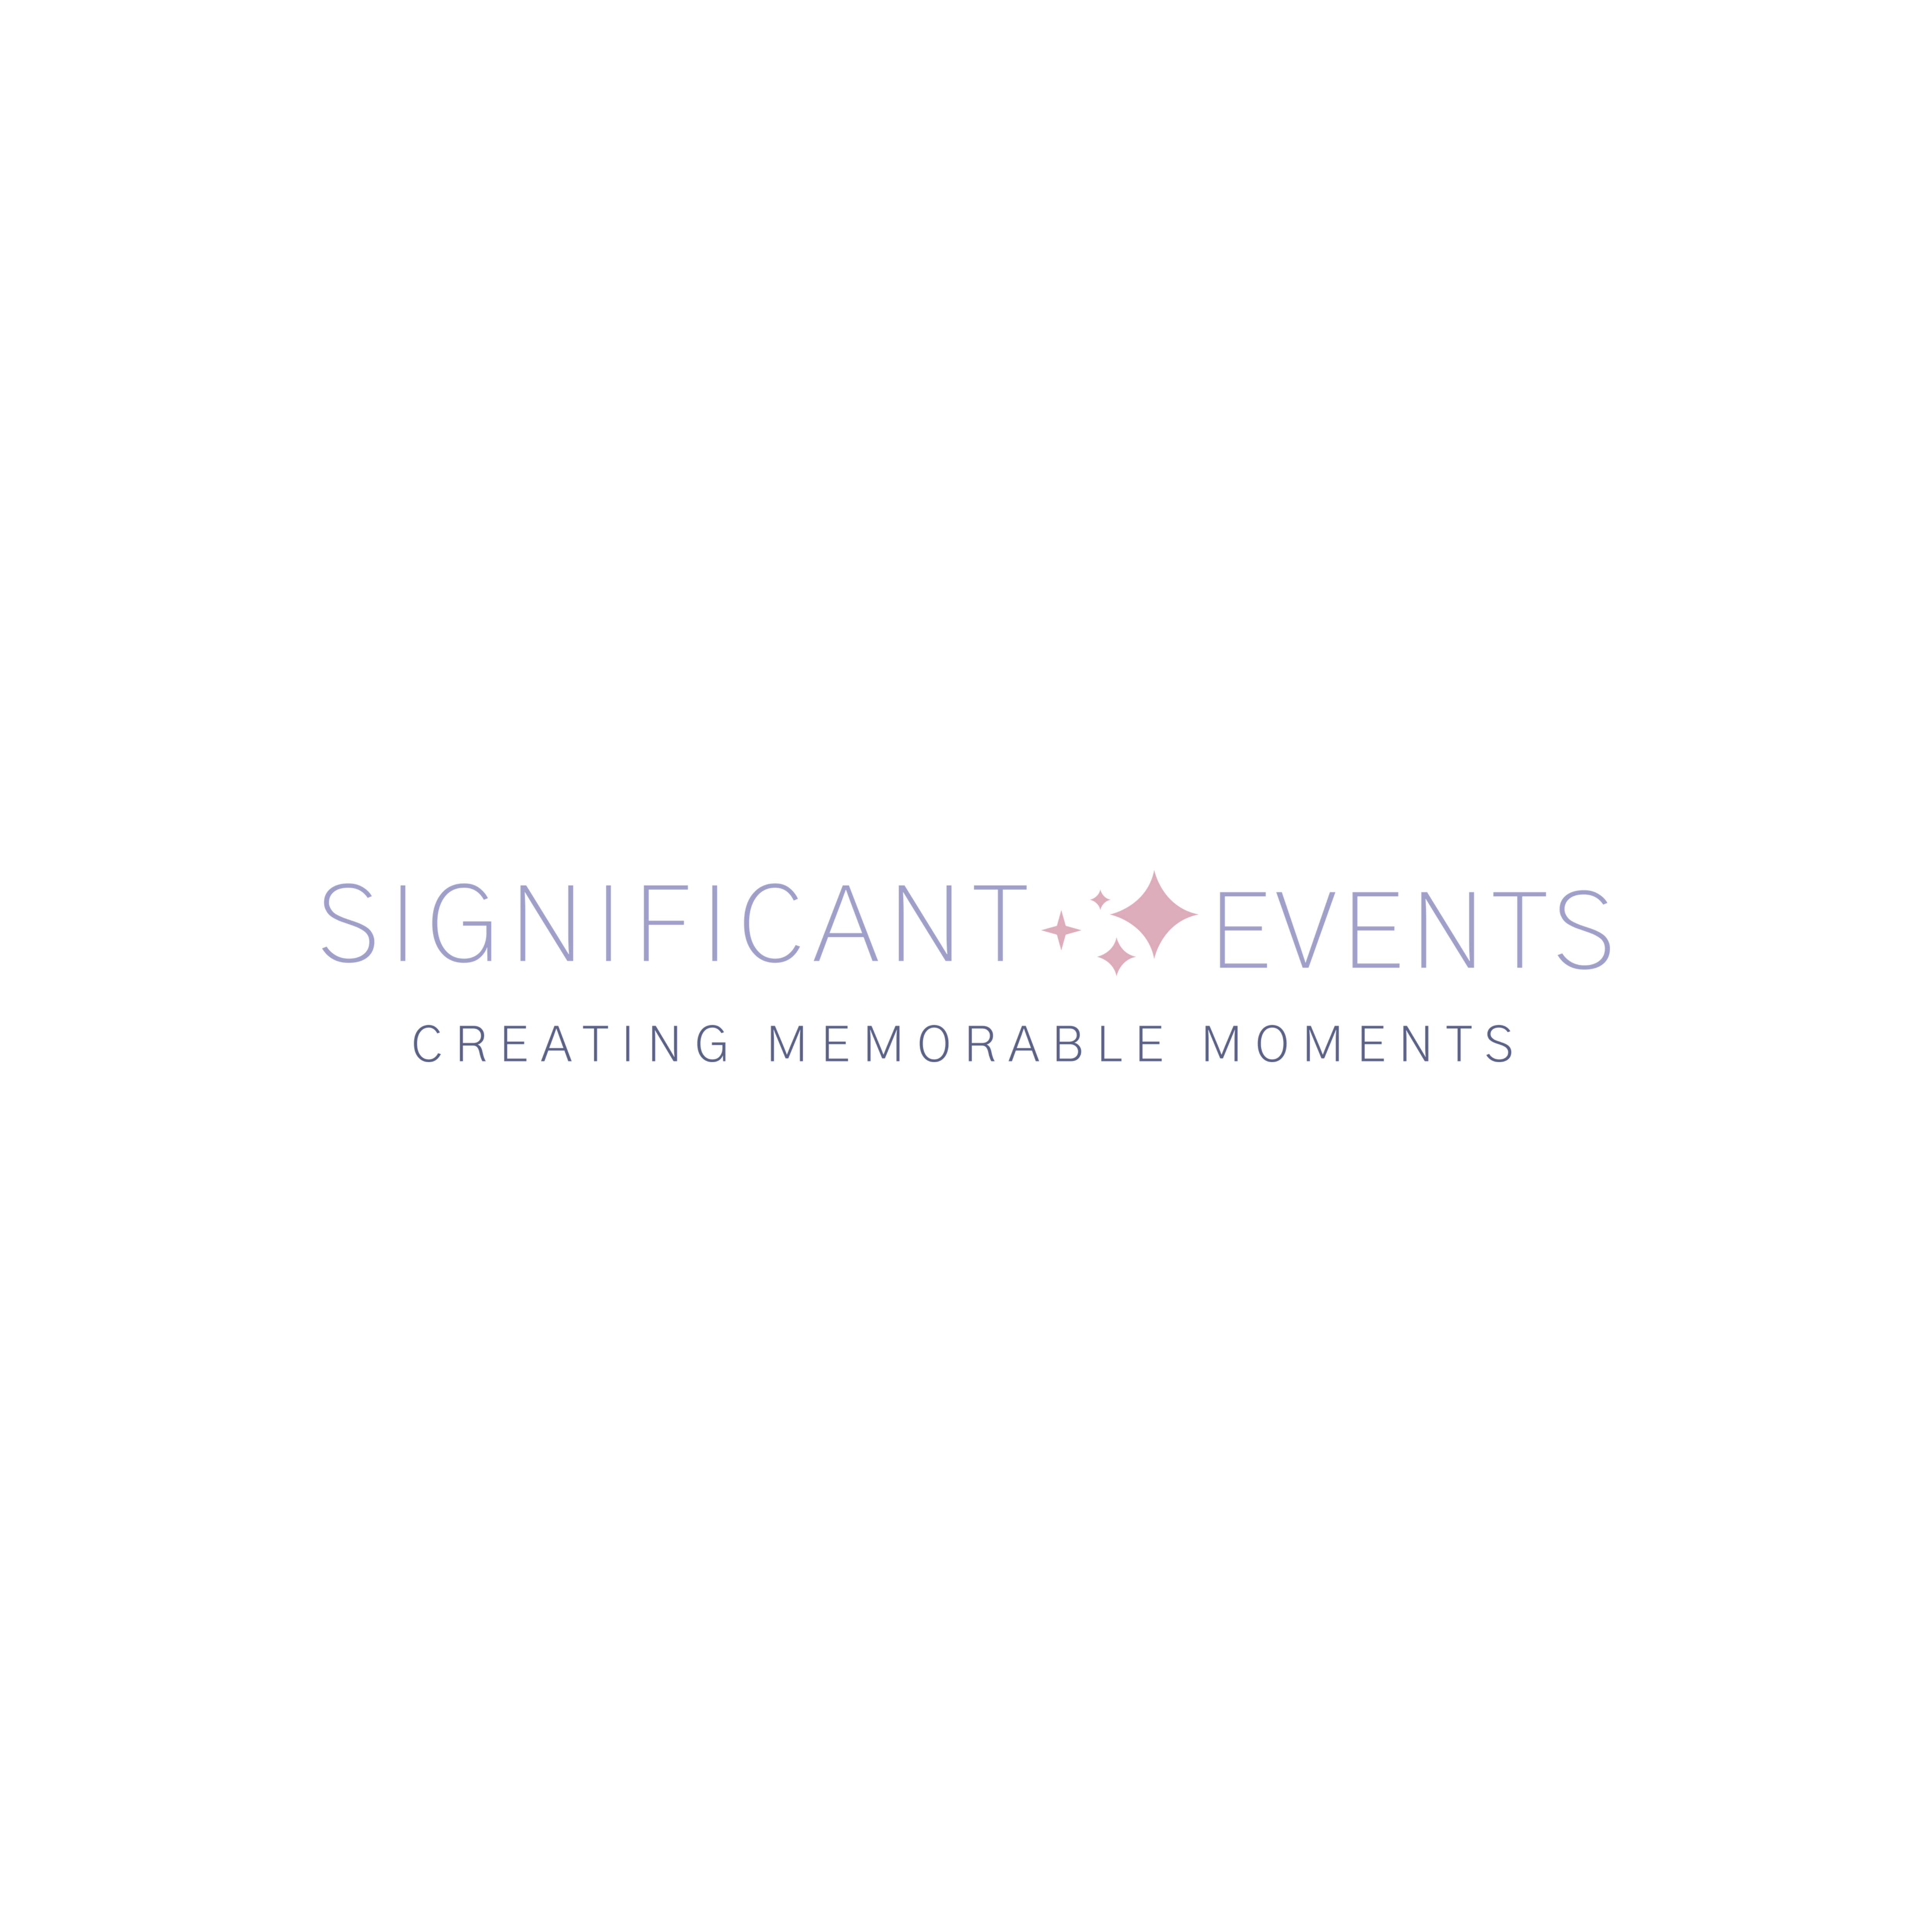 Significant Events rectangular logo